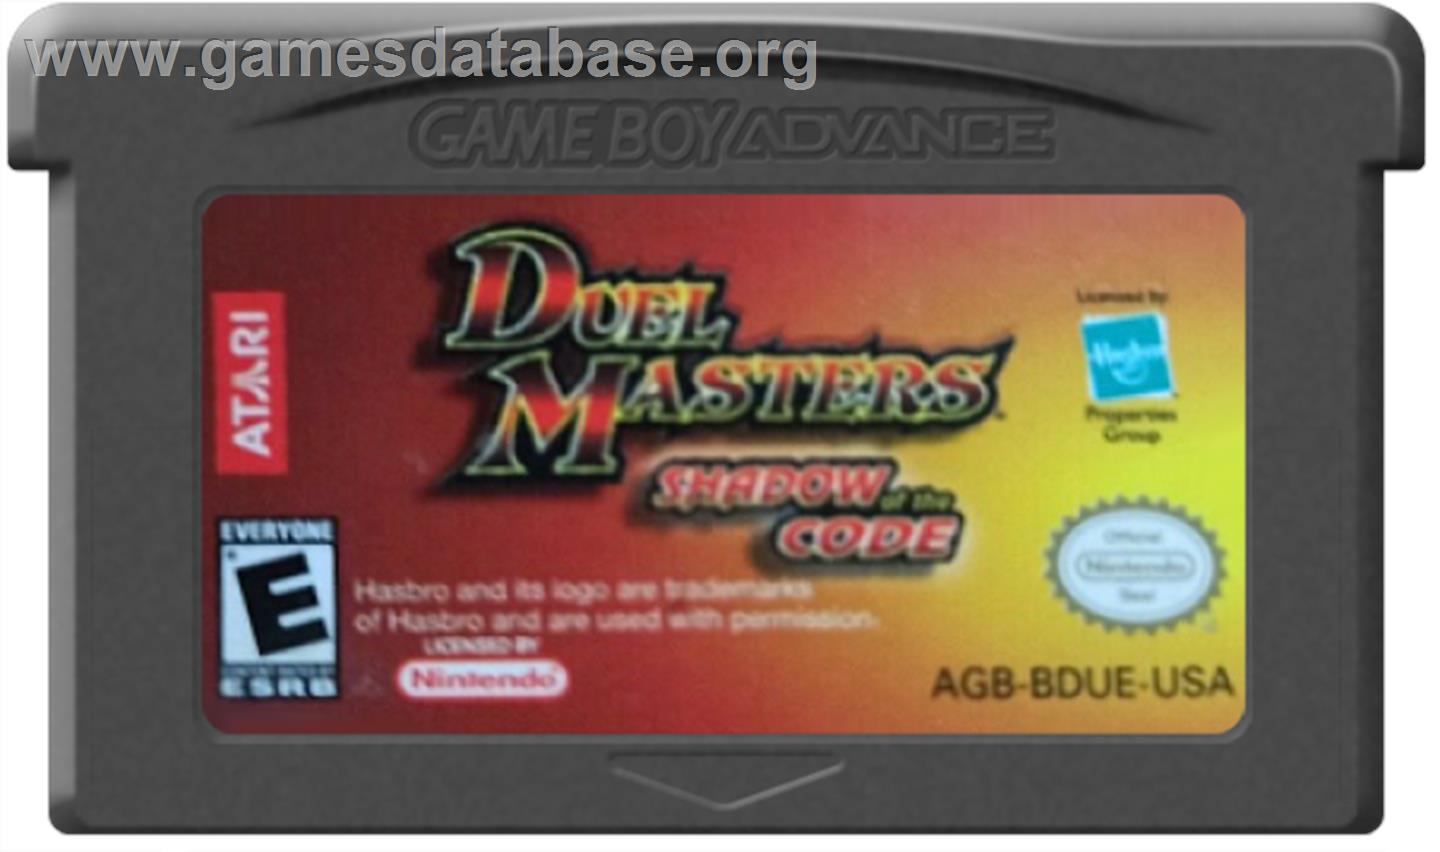 Duel Masters Shadow of the Code - Nintendo Game Boy Advance - Artwork - Cartridge